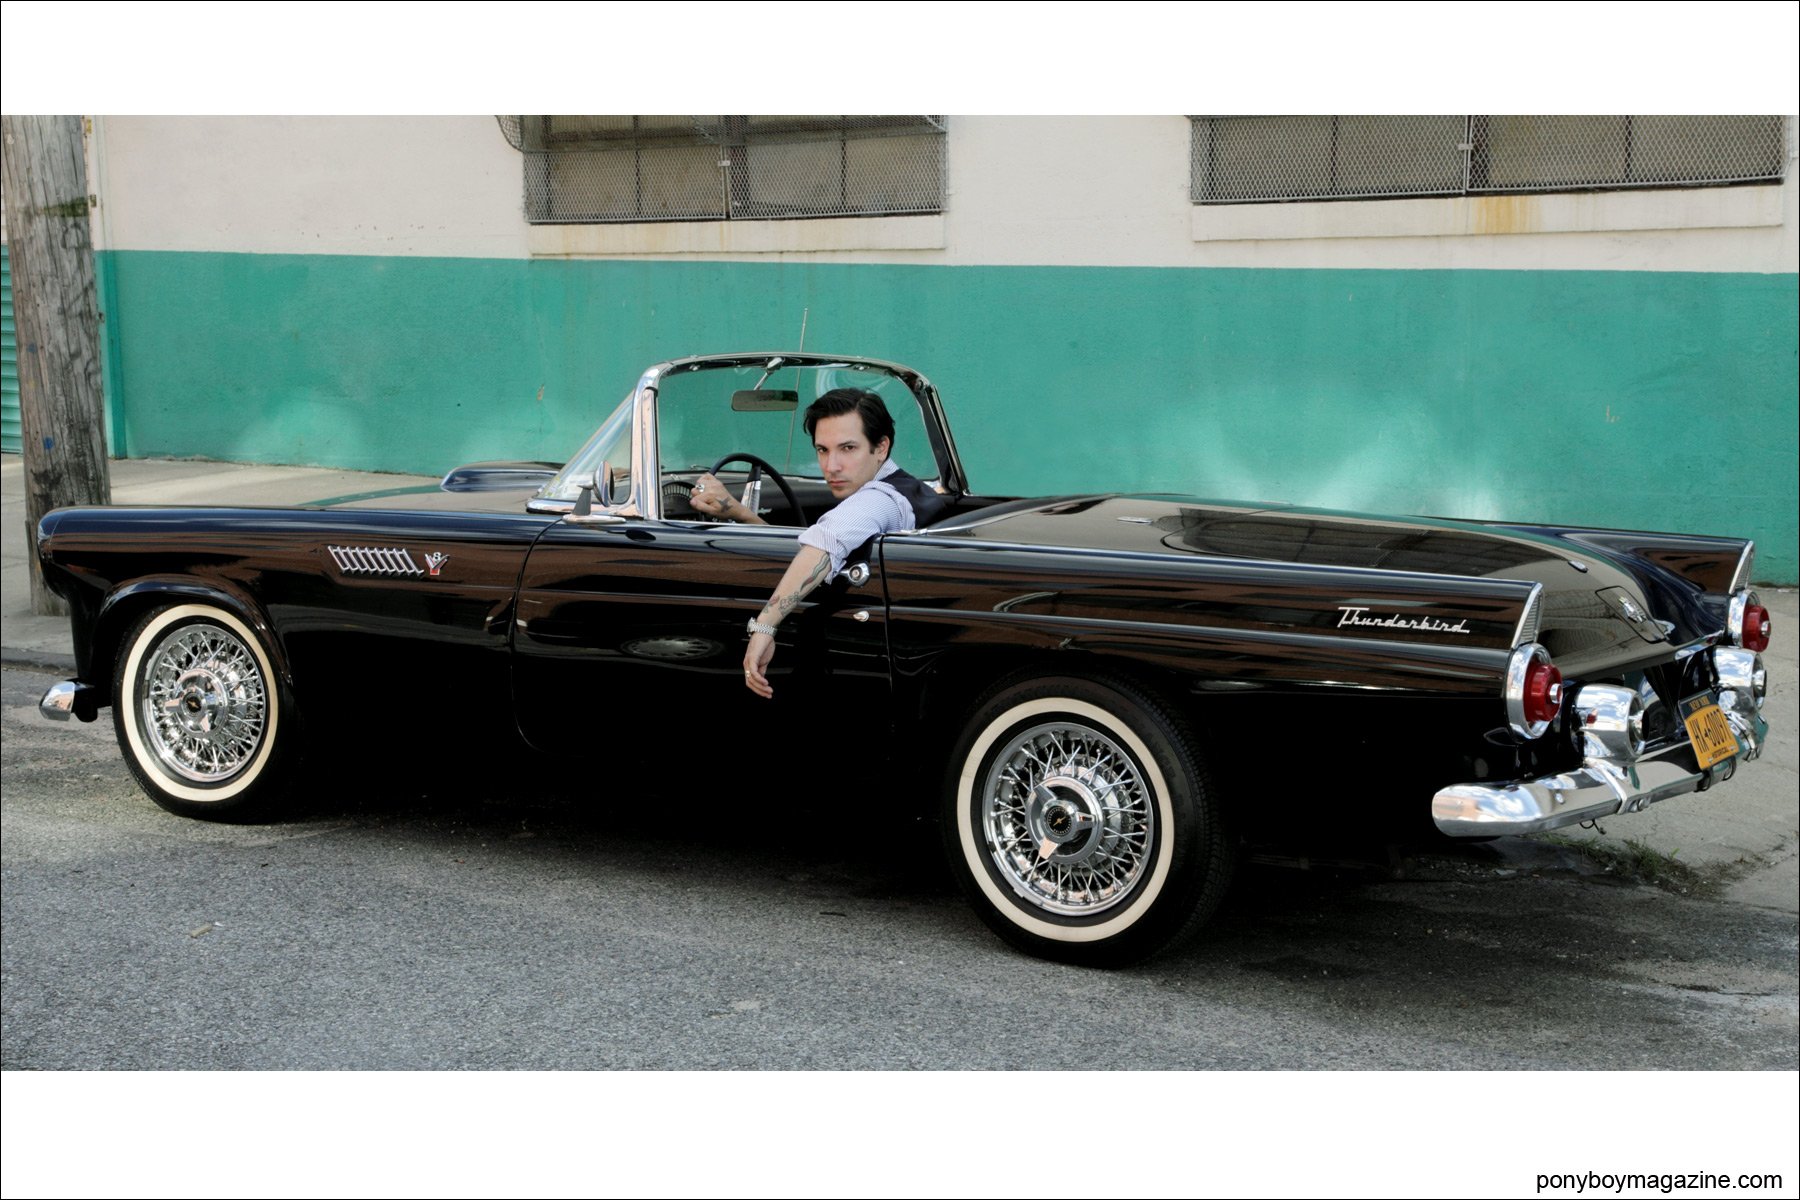 Oddities star Ryan Matthew Cohn photographed in Greenpoint for Ponyboy Magazine by Alexander Thompson.